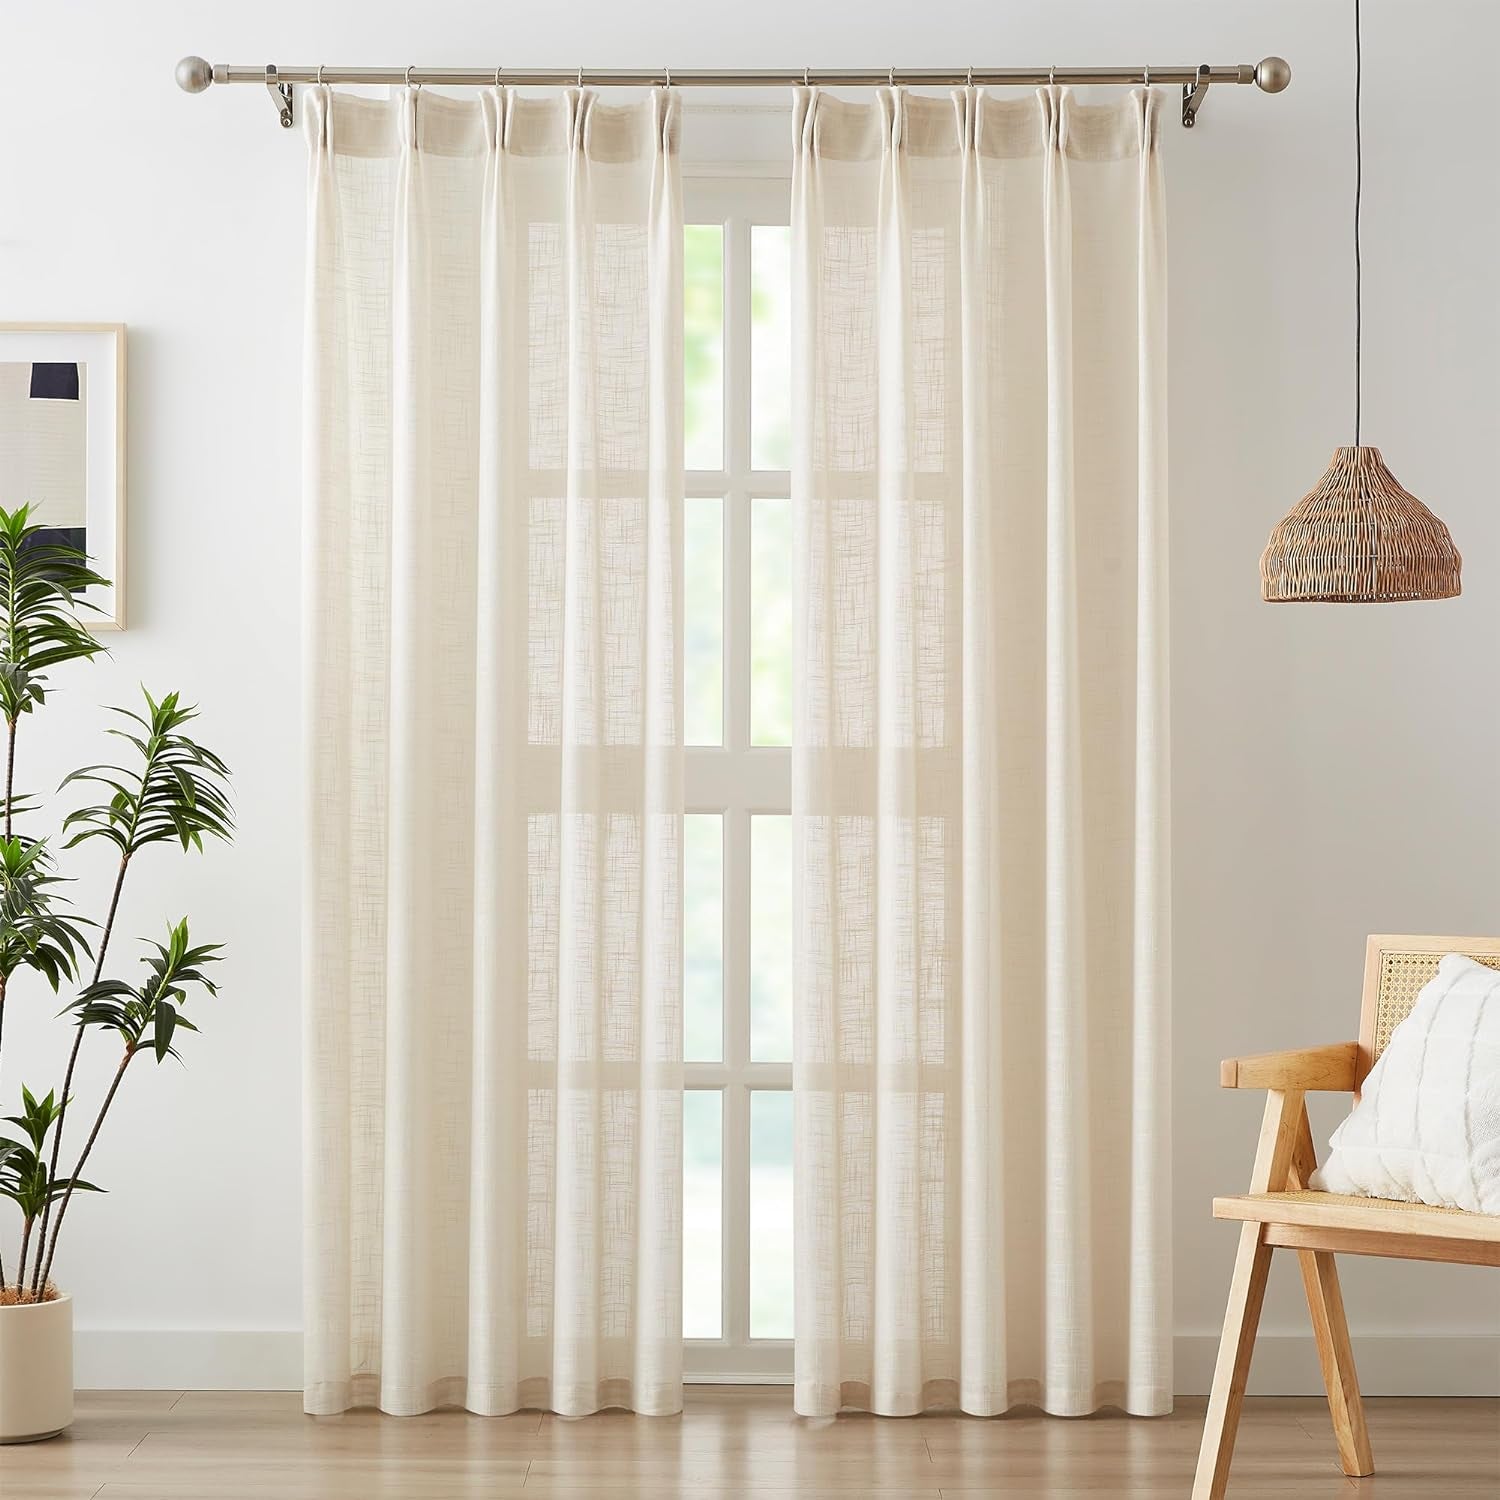 FMFUNCTEX Natural Semi-Sheer Curtains for Living Room Rich Linen Textured Look Window Curtain Draperies 52”W X63”L 2 Panels Grommet Top  Fmfunctex Multi Top - Natural (Linen Look) 52" X 96" 2Pcs 